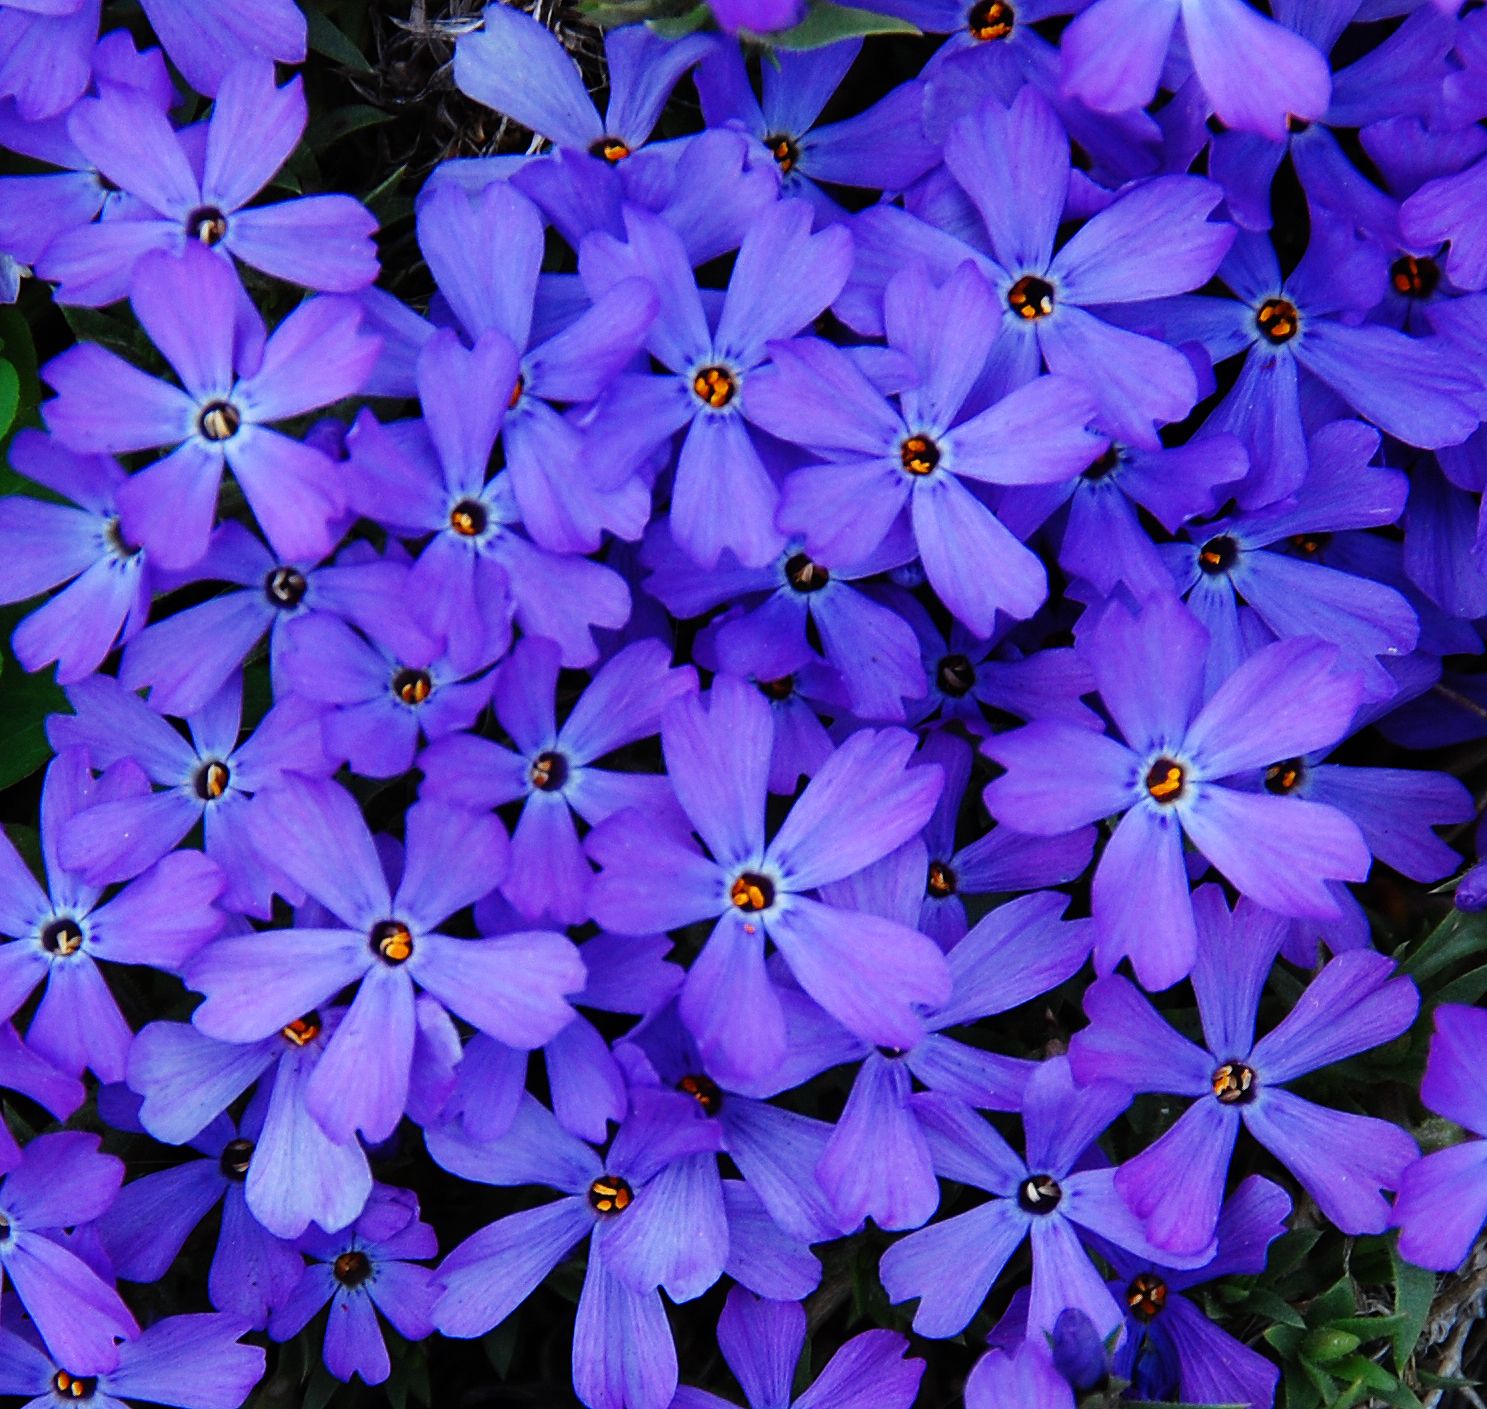 images/plants/phlox/phl-violet-pinwheels/phl-violet-pinwheels-0006.jpg